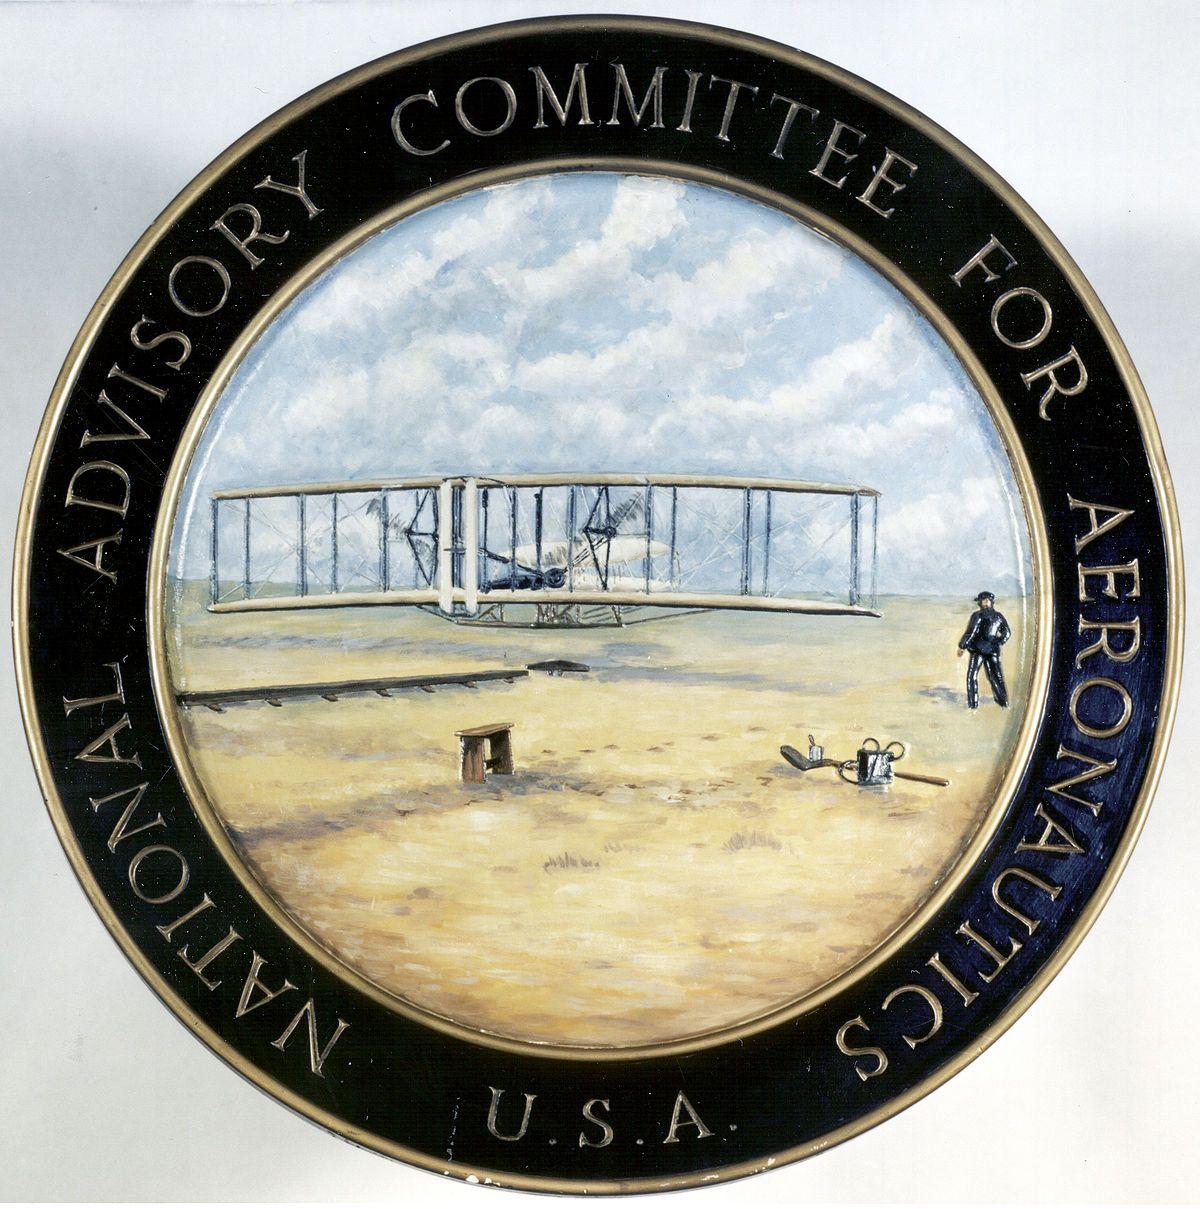 NACA NASA's Old Logo - National Advisory Committee for Aeronautics